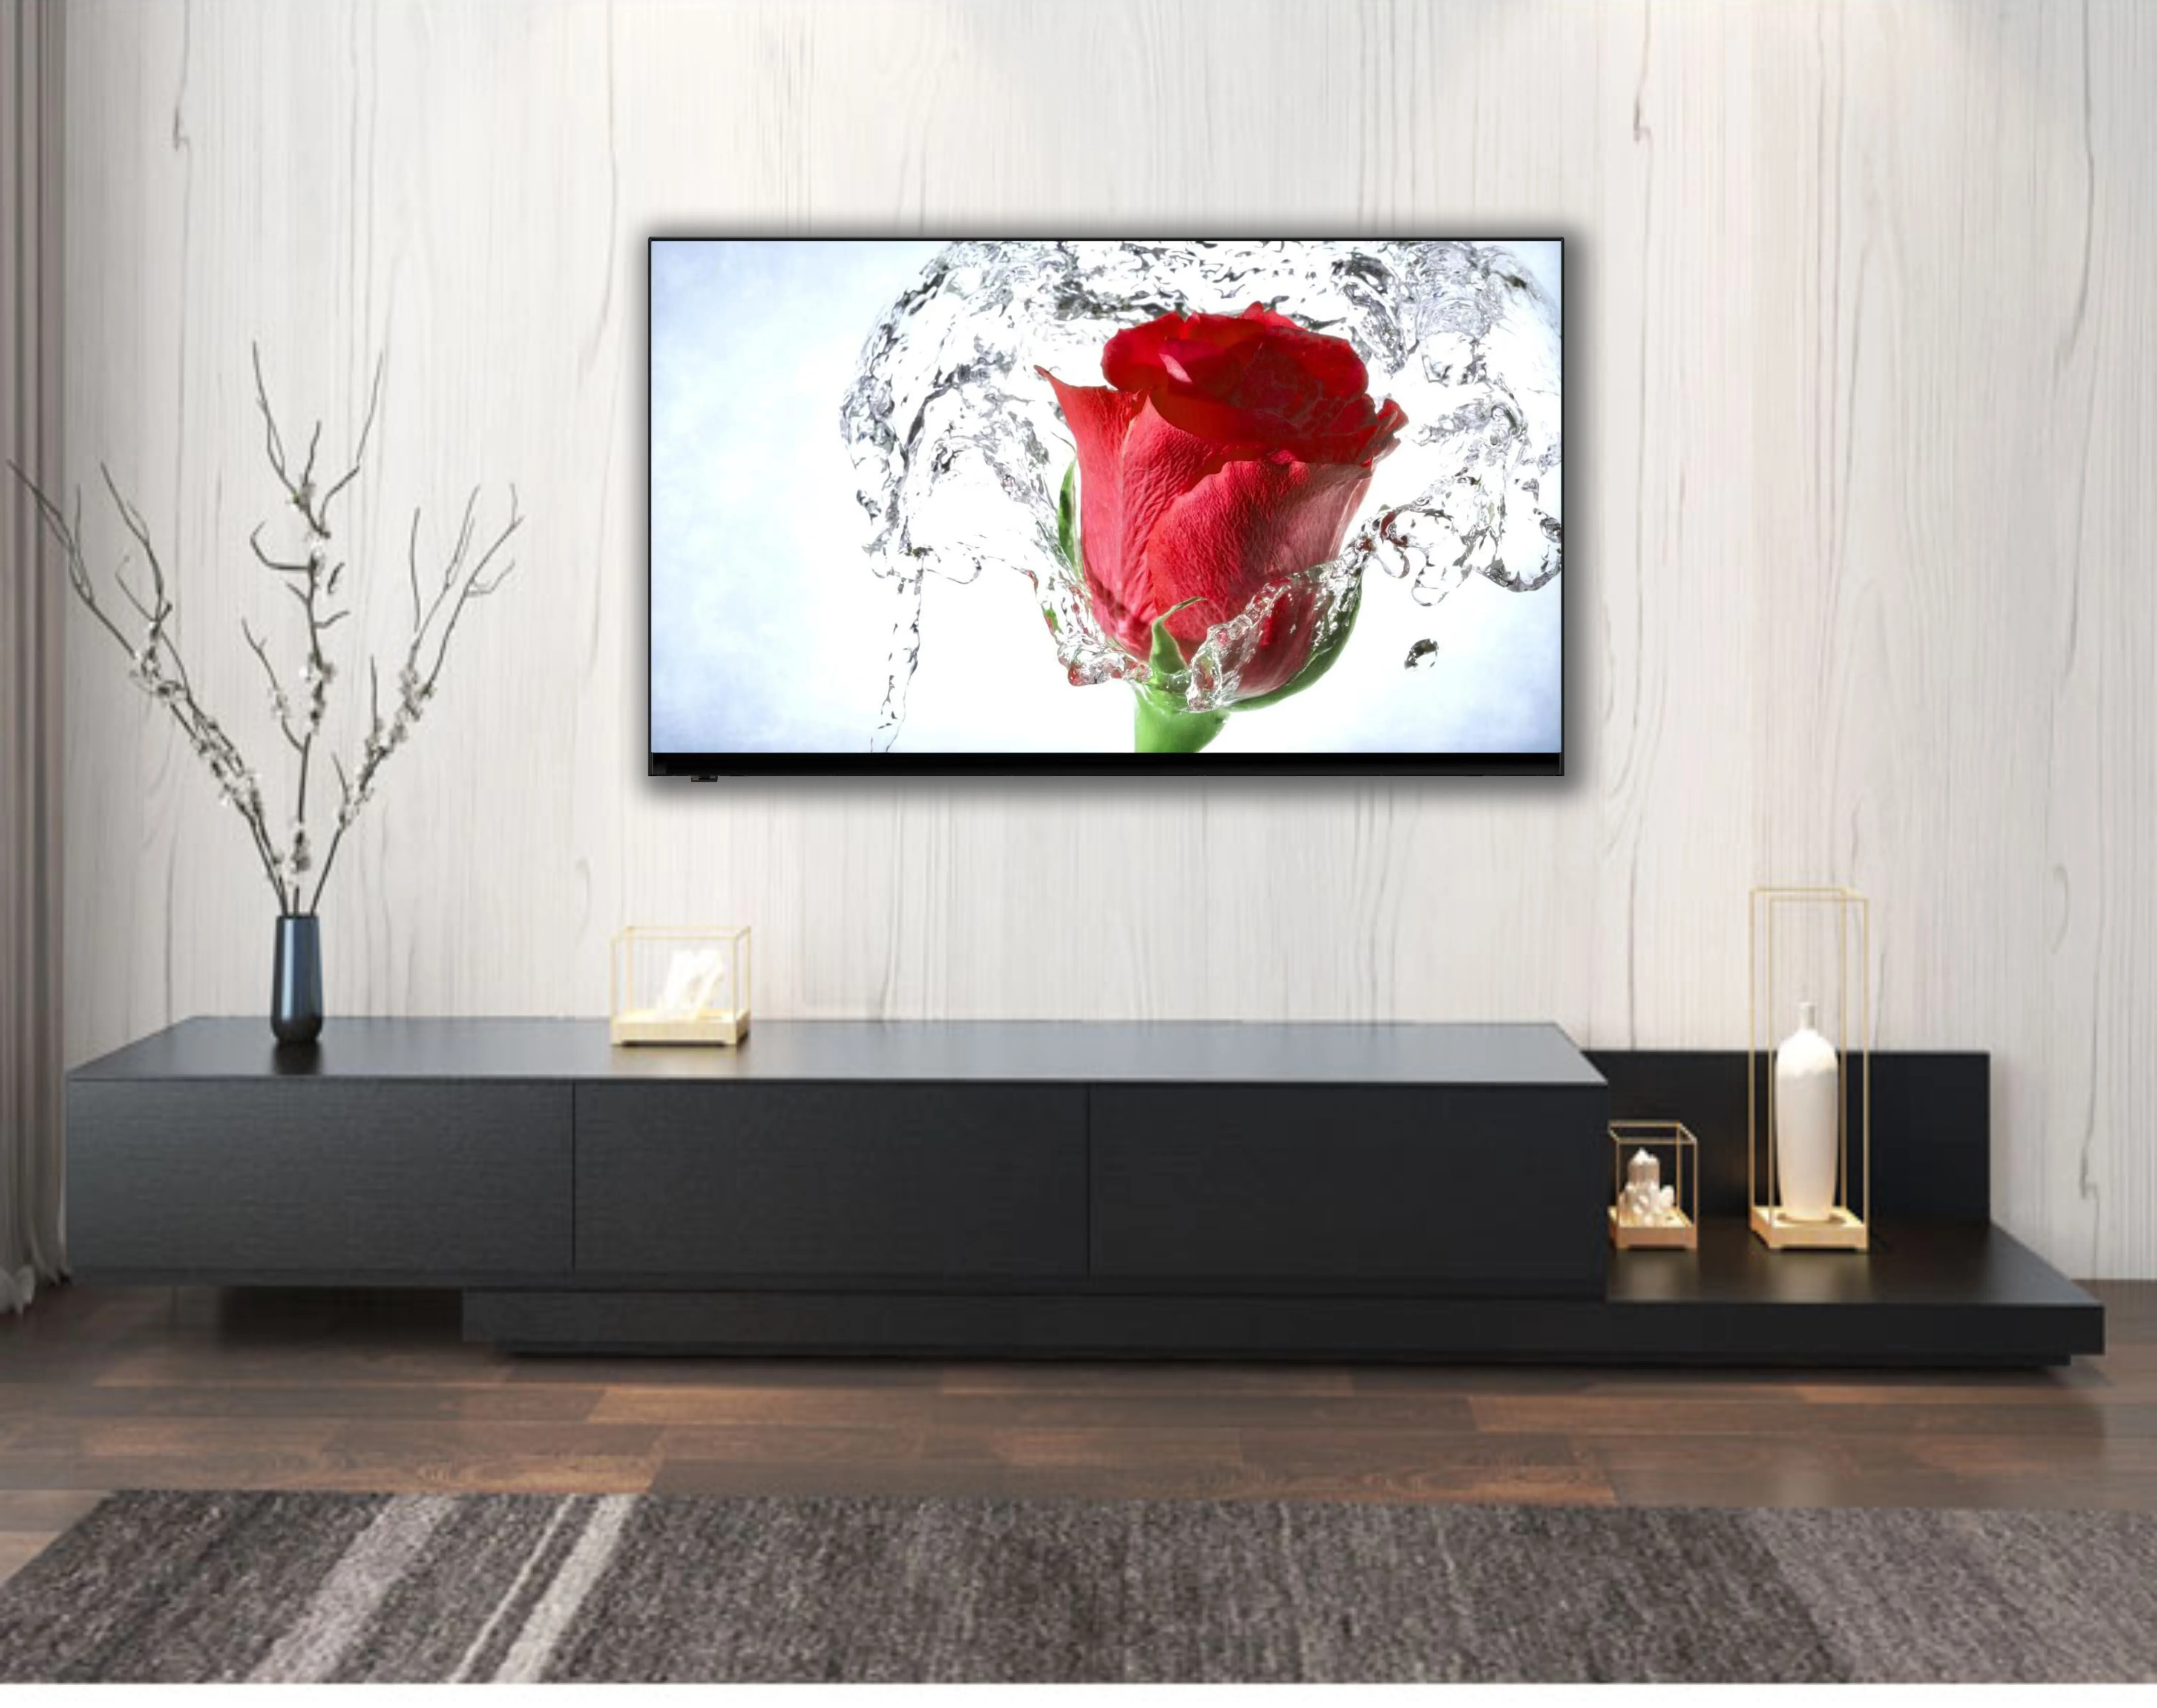 Haina frameless super-slim smart tv 32 inch with WIFI